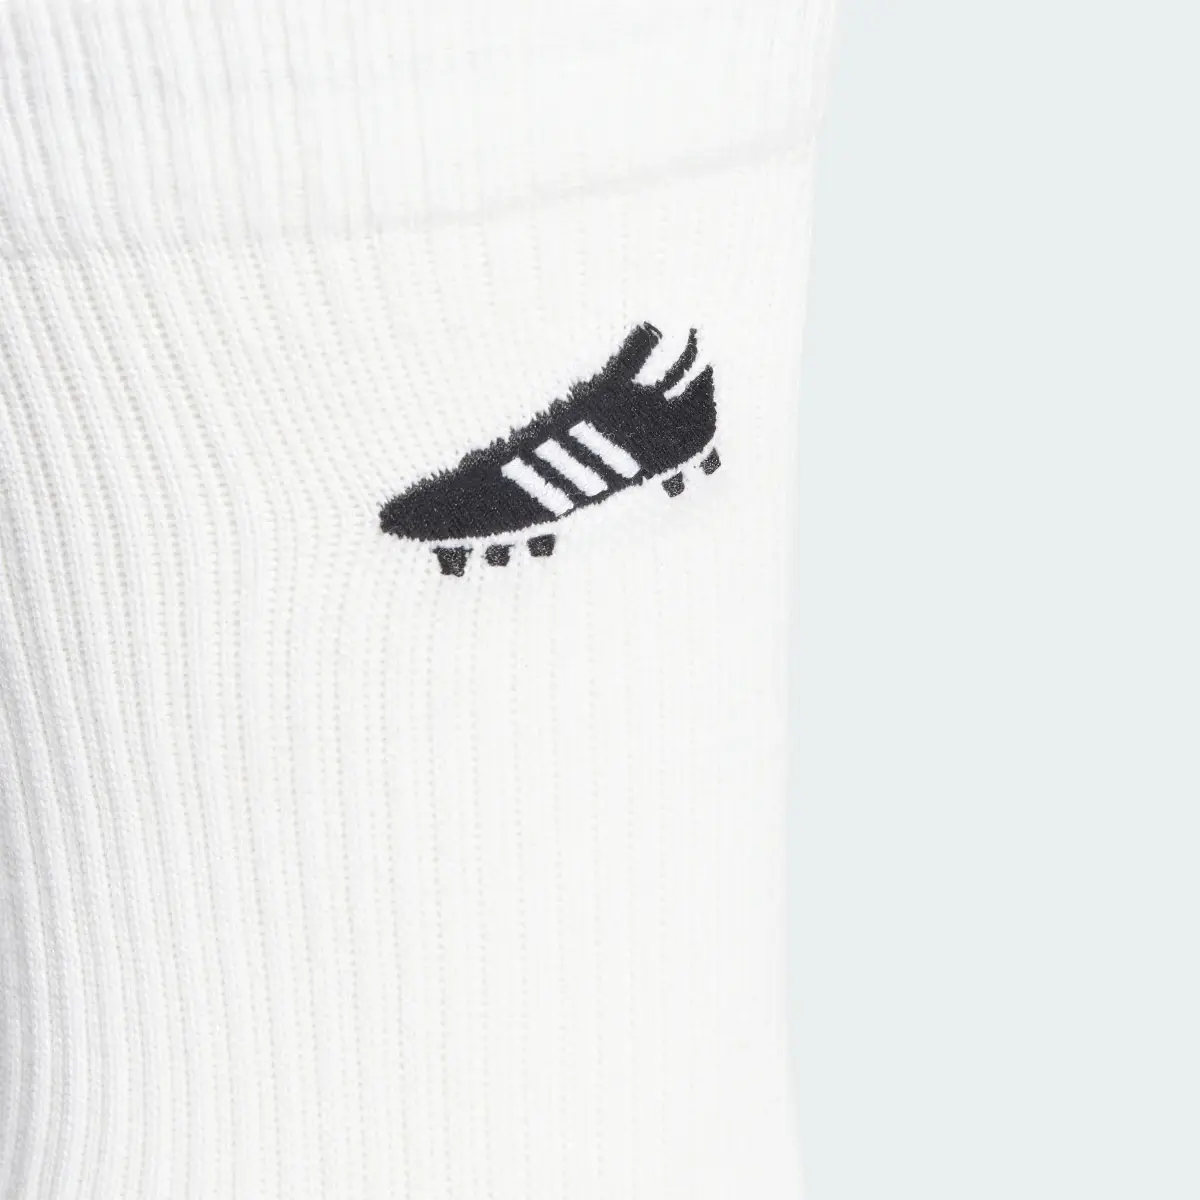 Adidas Chaussettes à motif chaussure de football brodé. 2